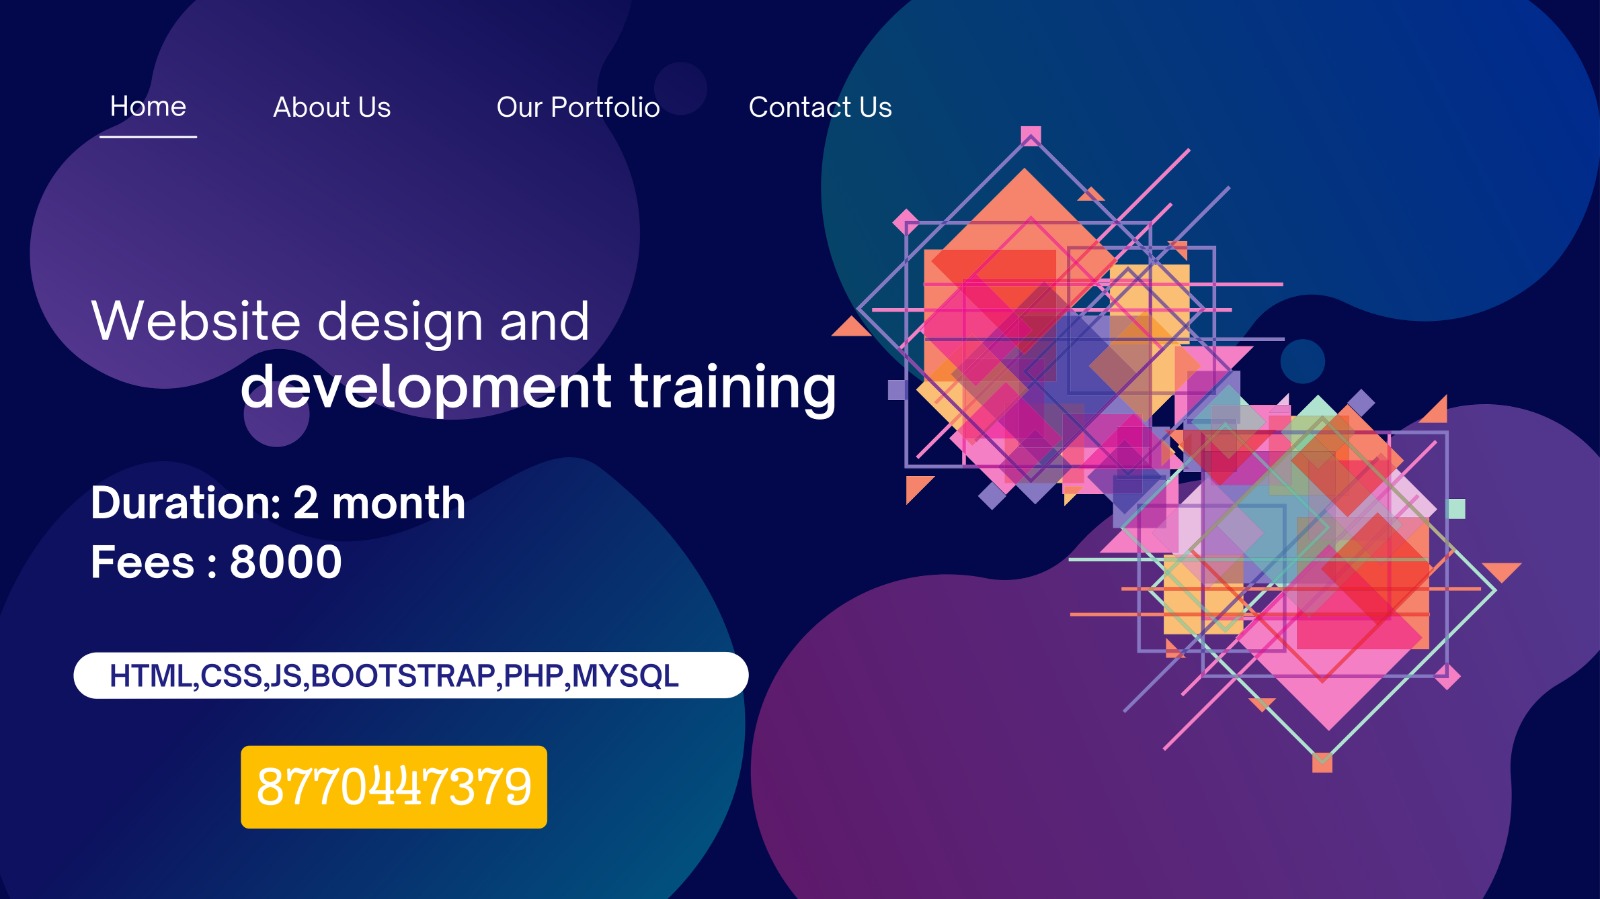 Website Design and development training by Param S